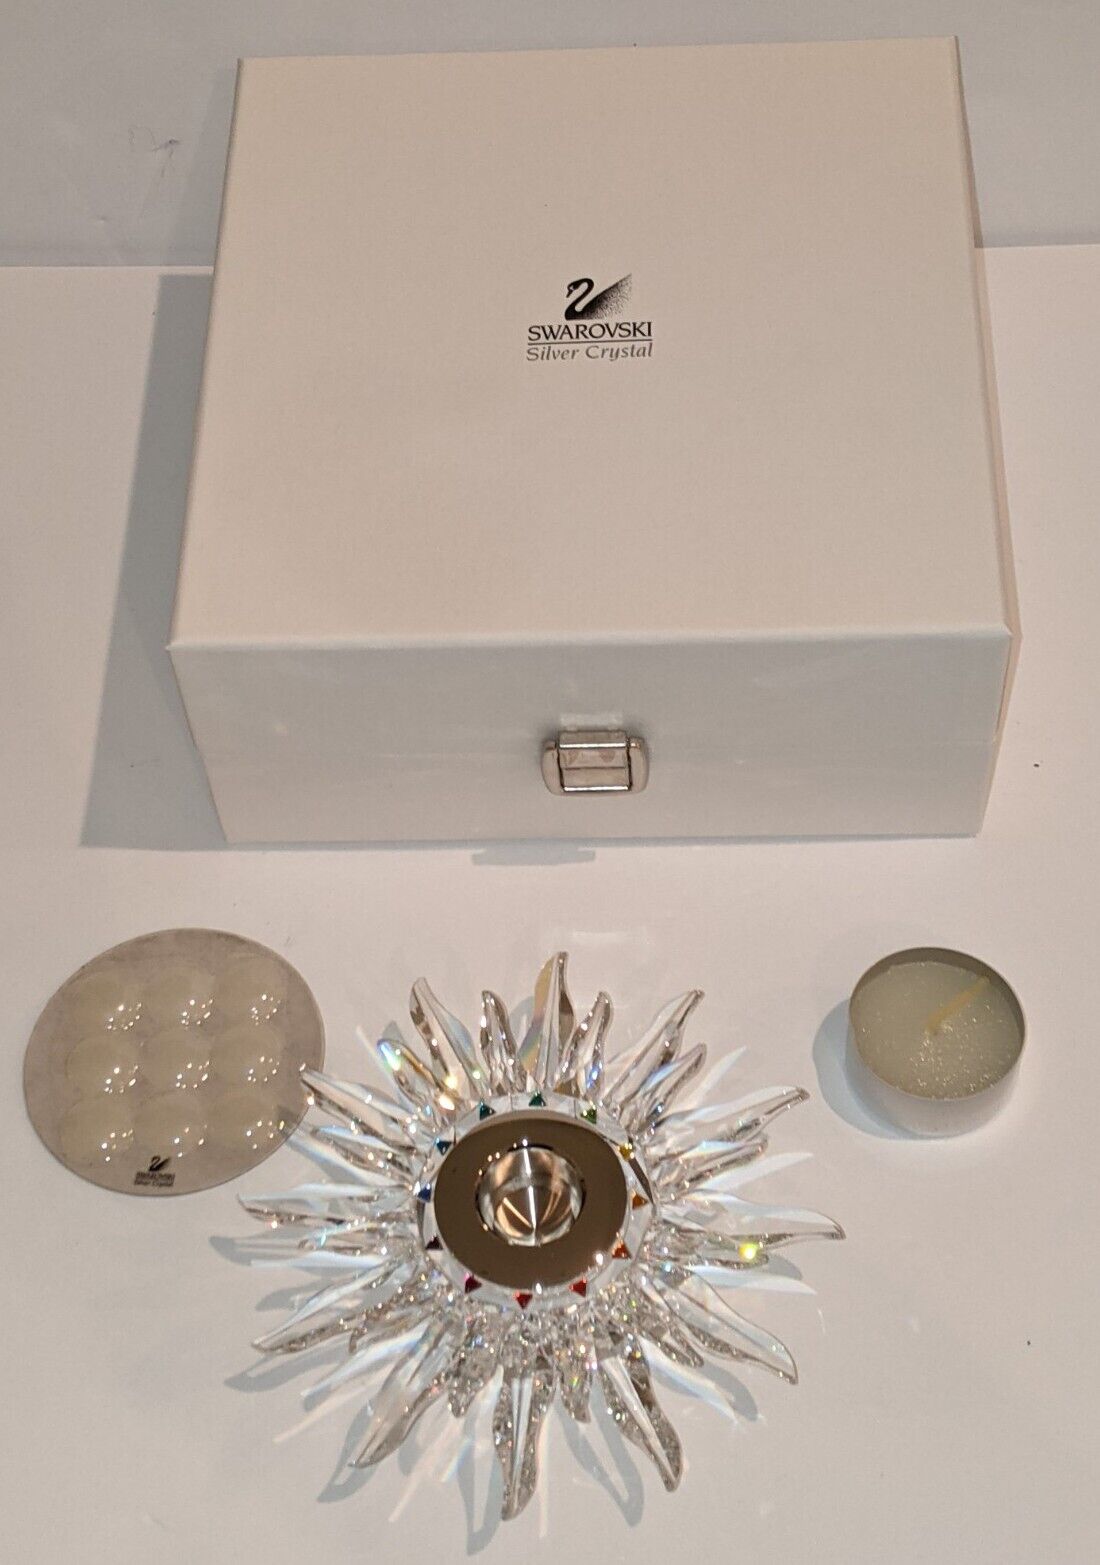 Swarovski Crystal Solaris Candleholder, 7600NR147000, New In Box